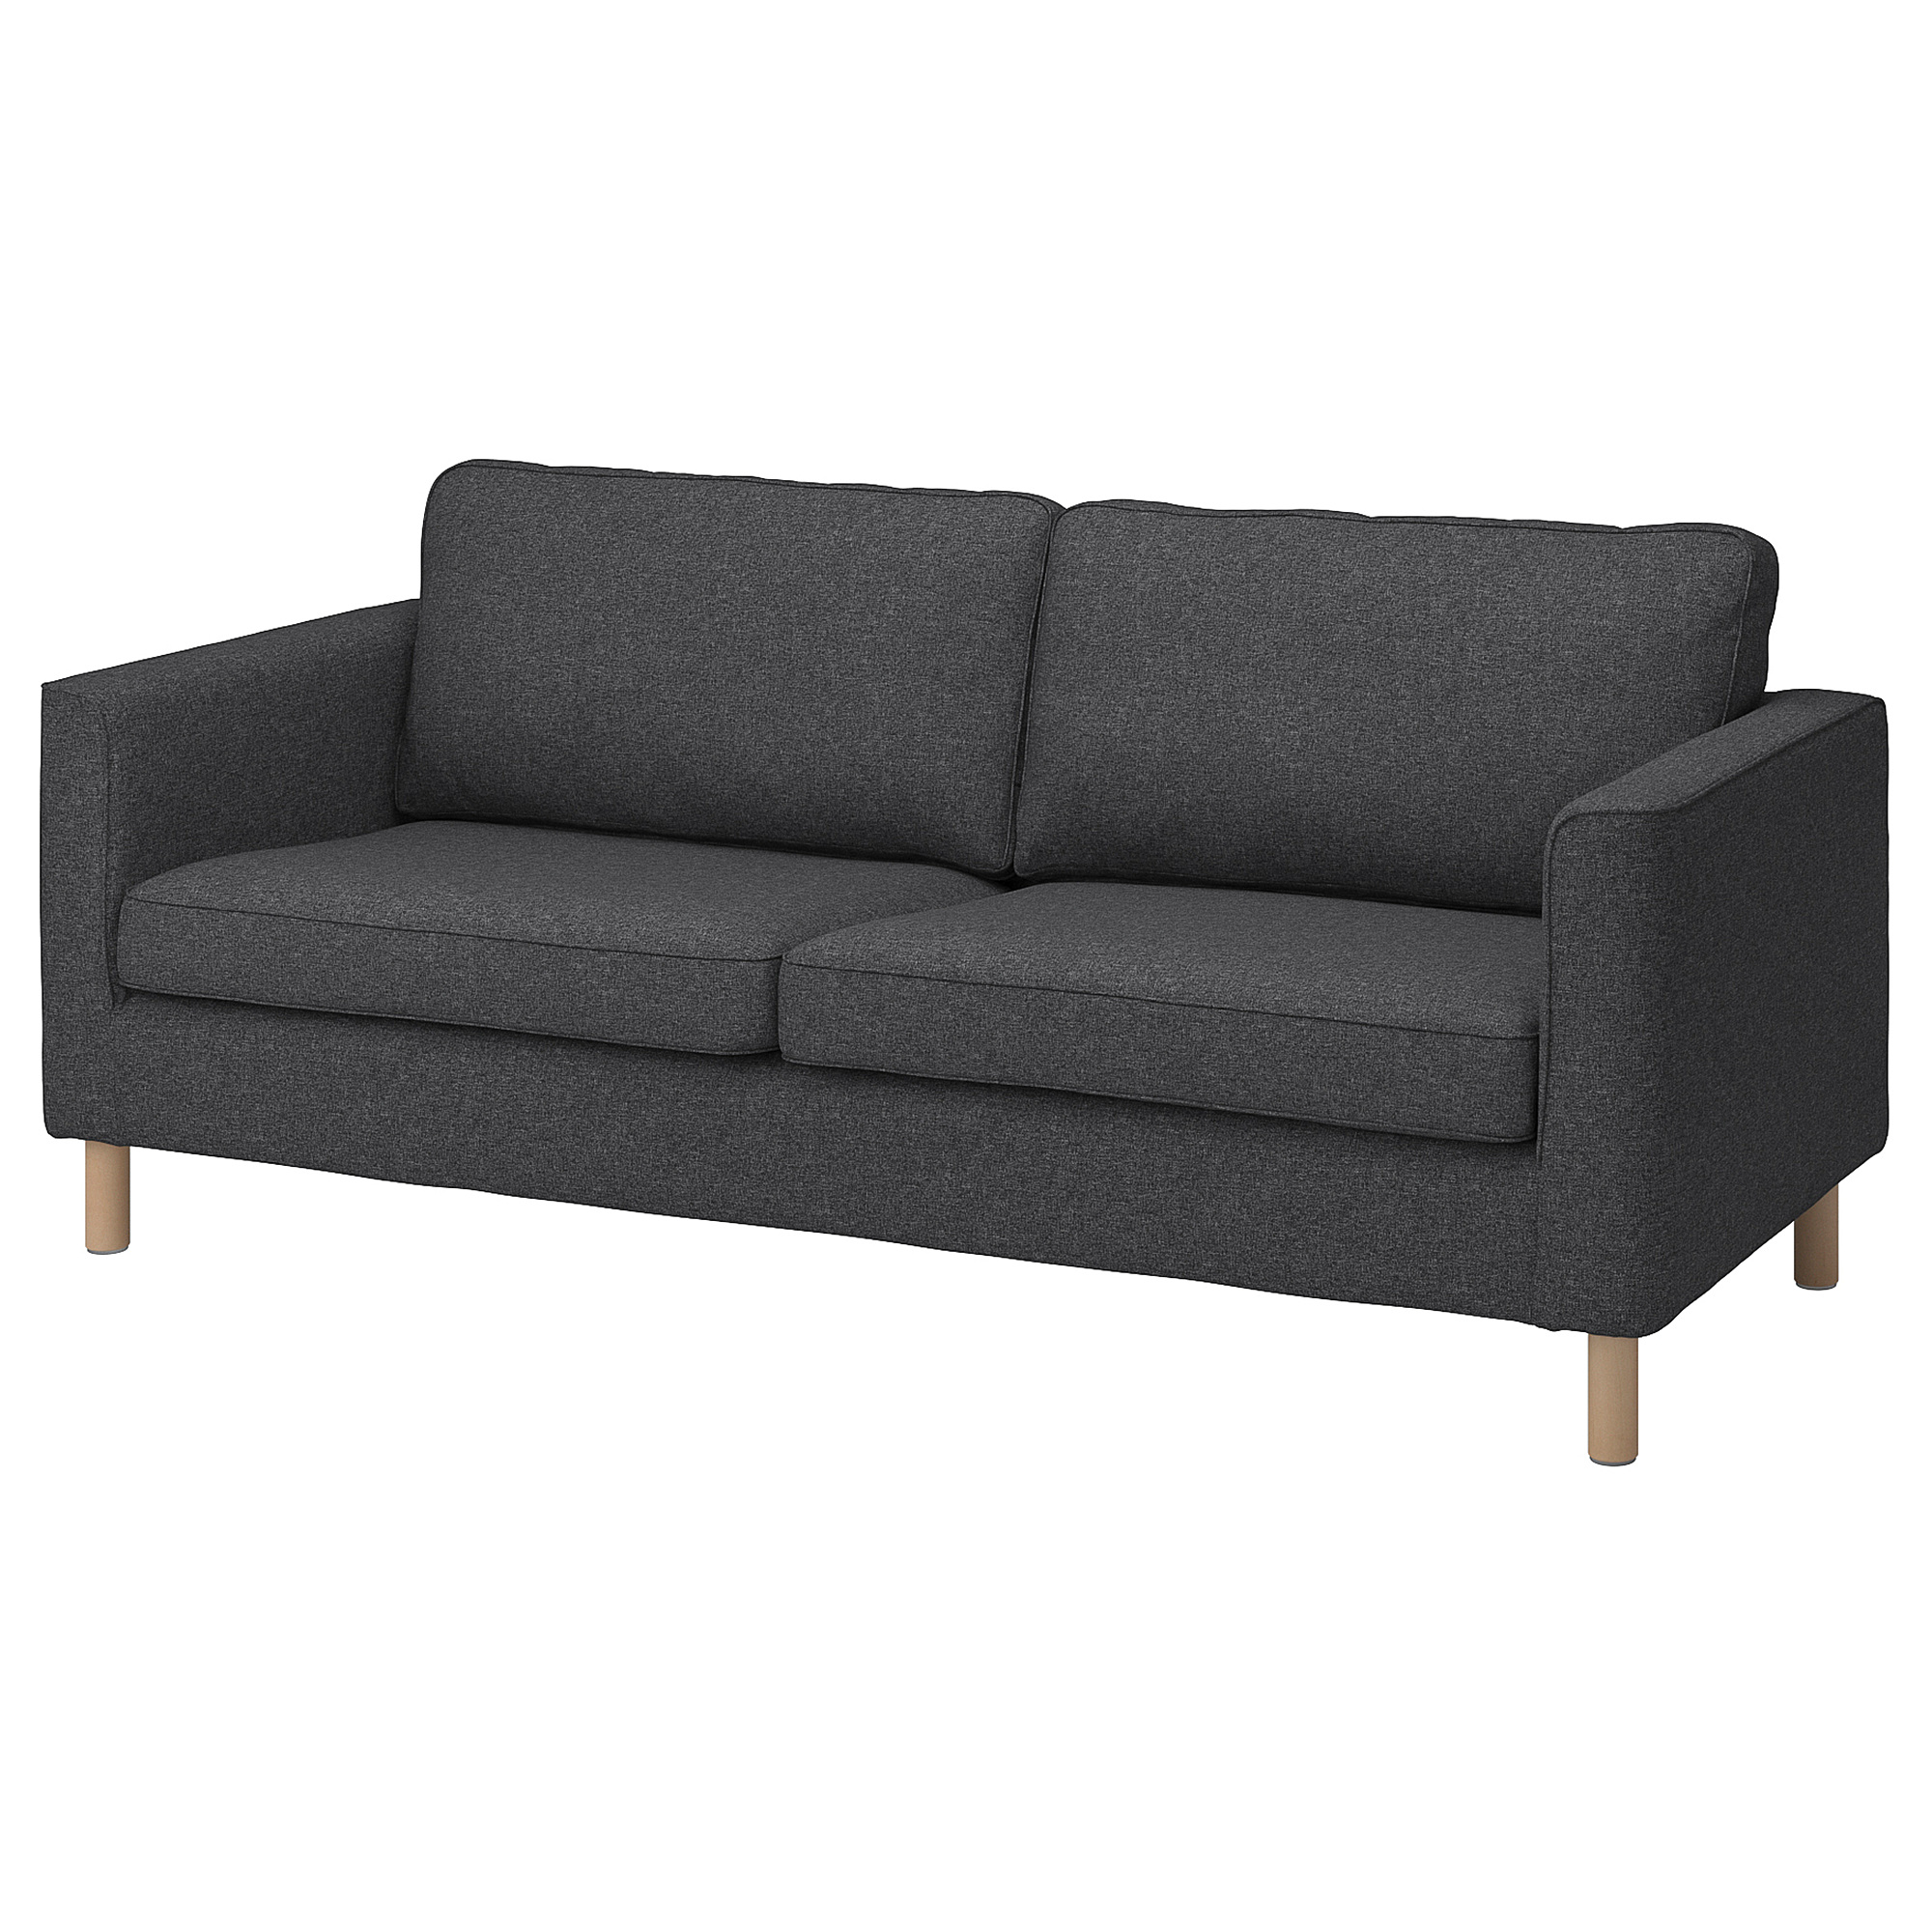 PÄRUP 3-seat sofa